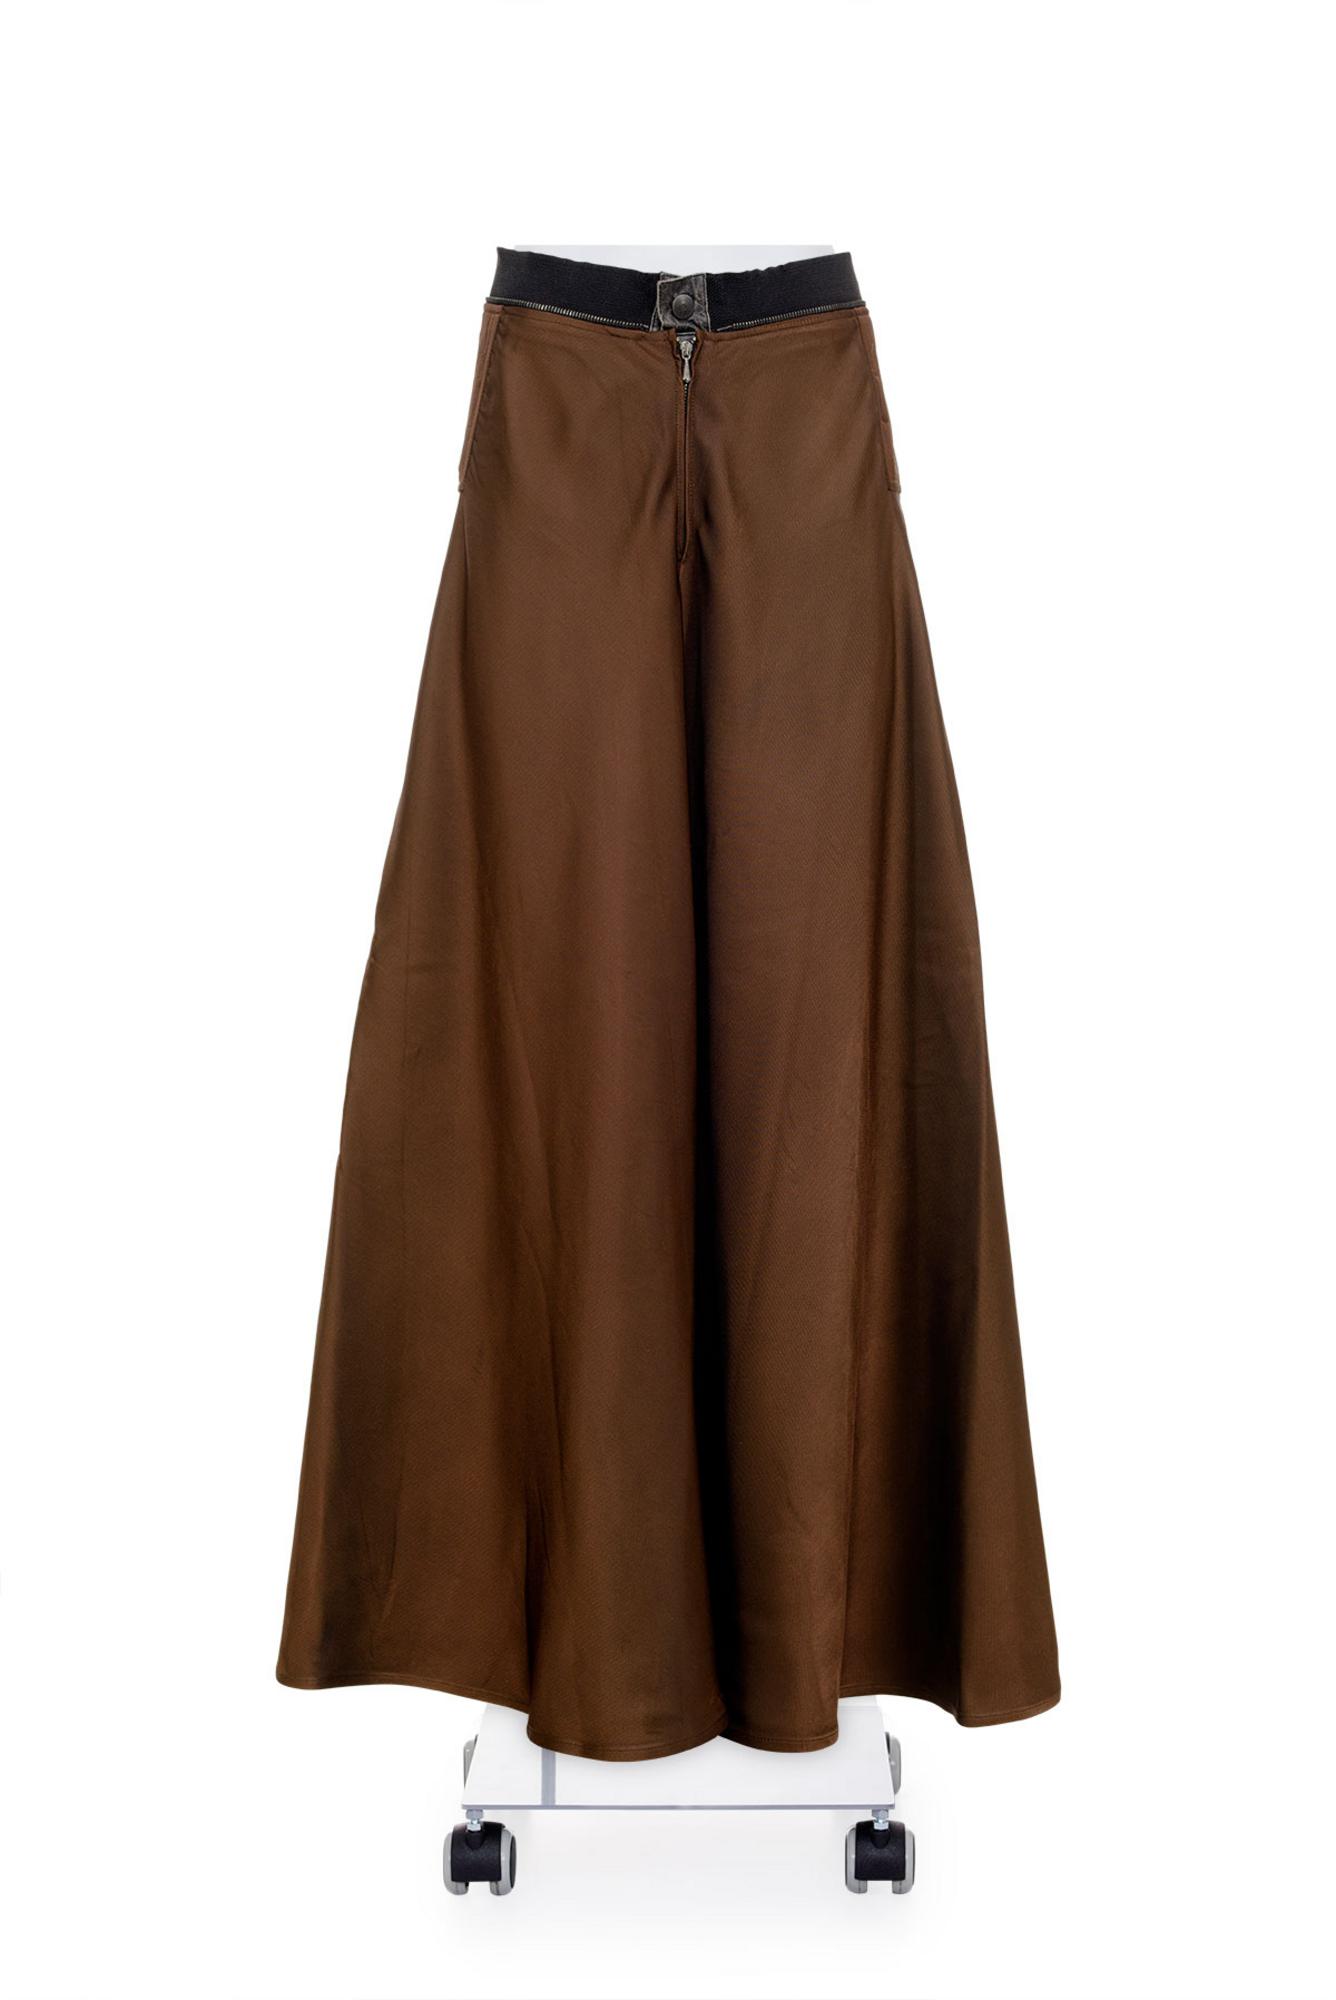 JEAN PAUL GAULTIER Bias cut maxi skirt DESCRIPTION: Brown bias cut maxi skirt...